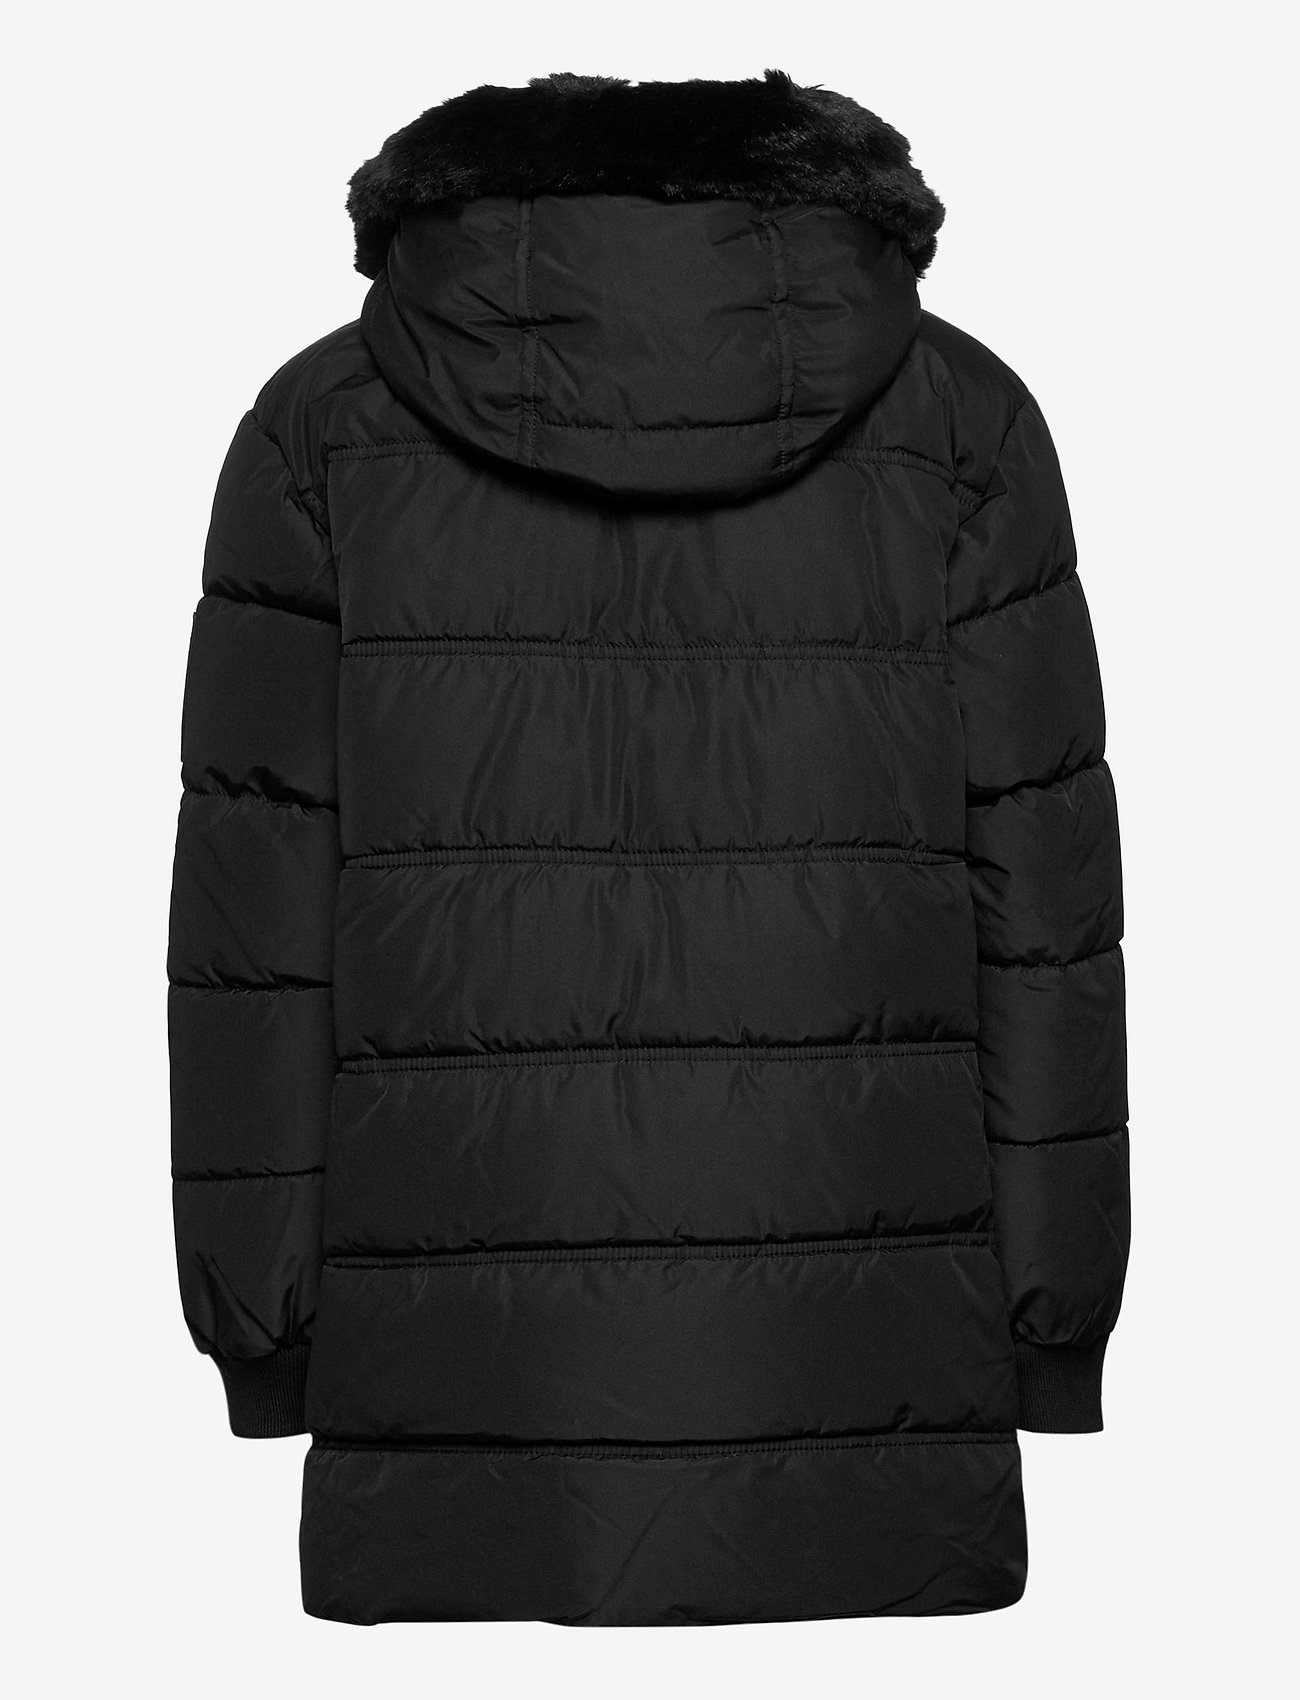 timberland black coat